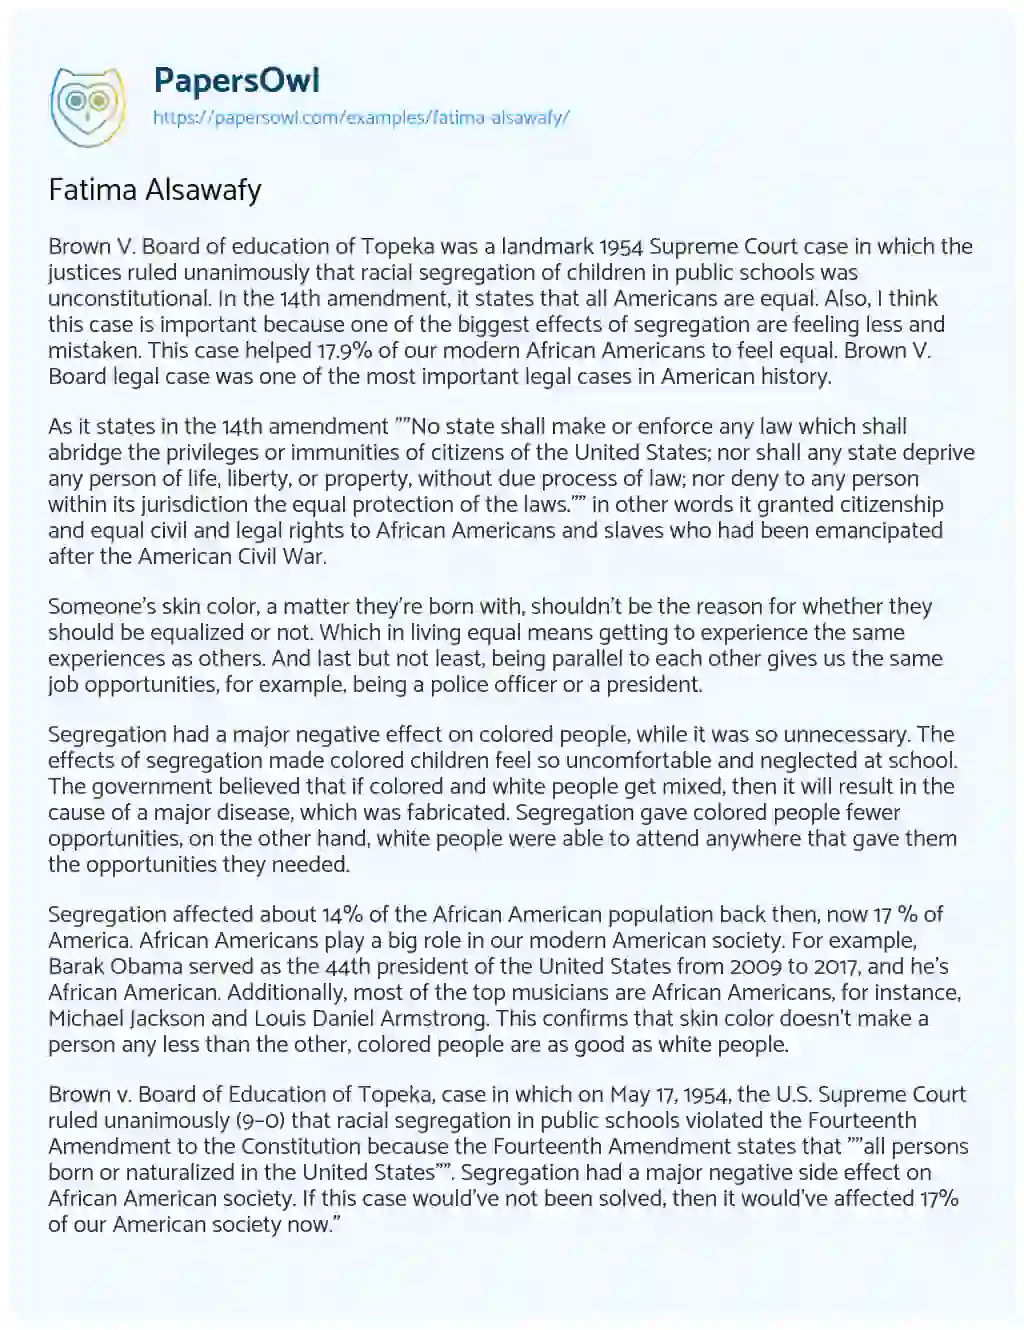 Fatima Alsawafy essay